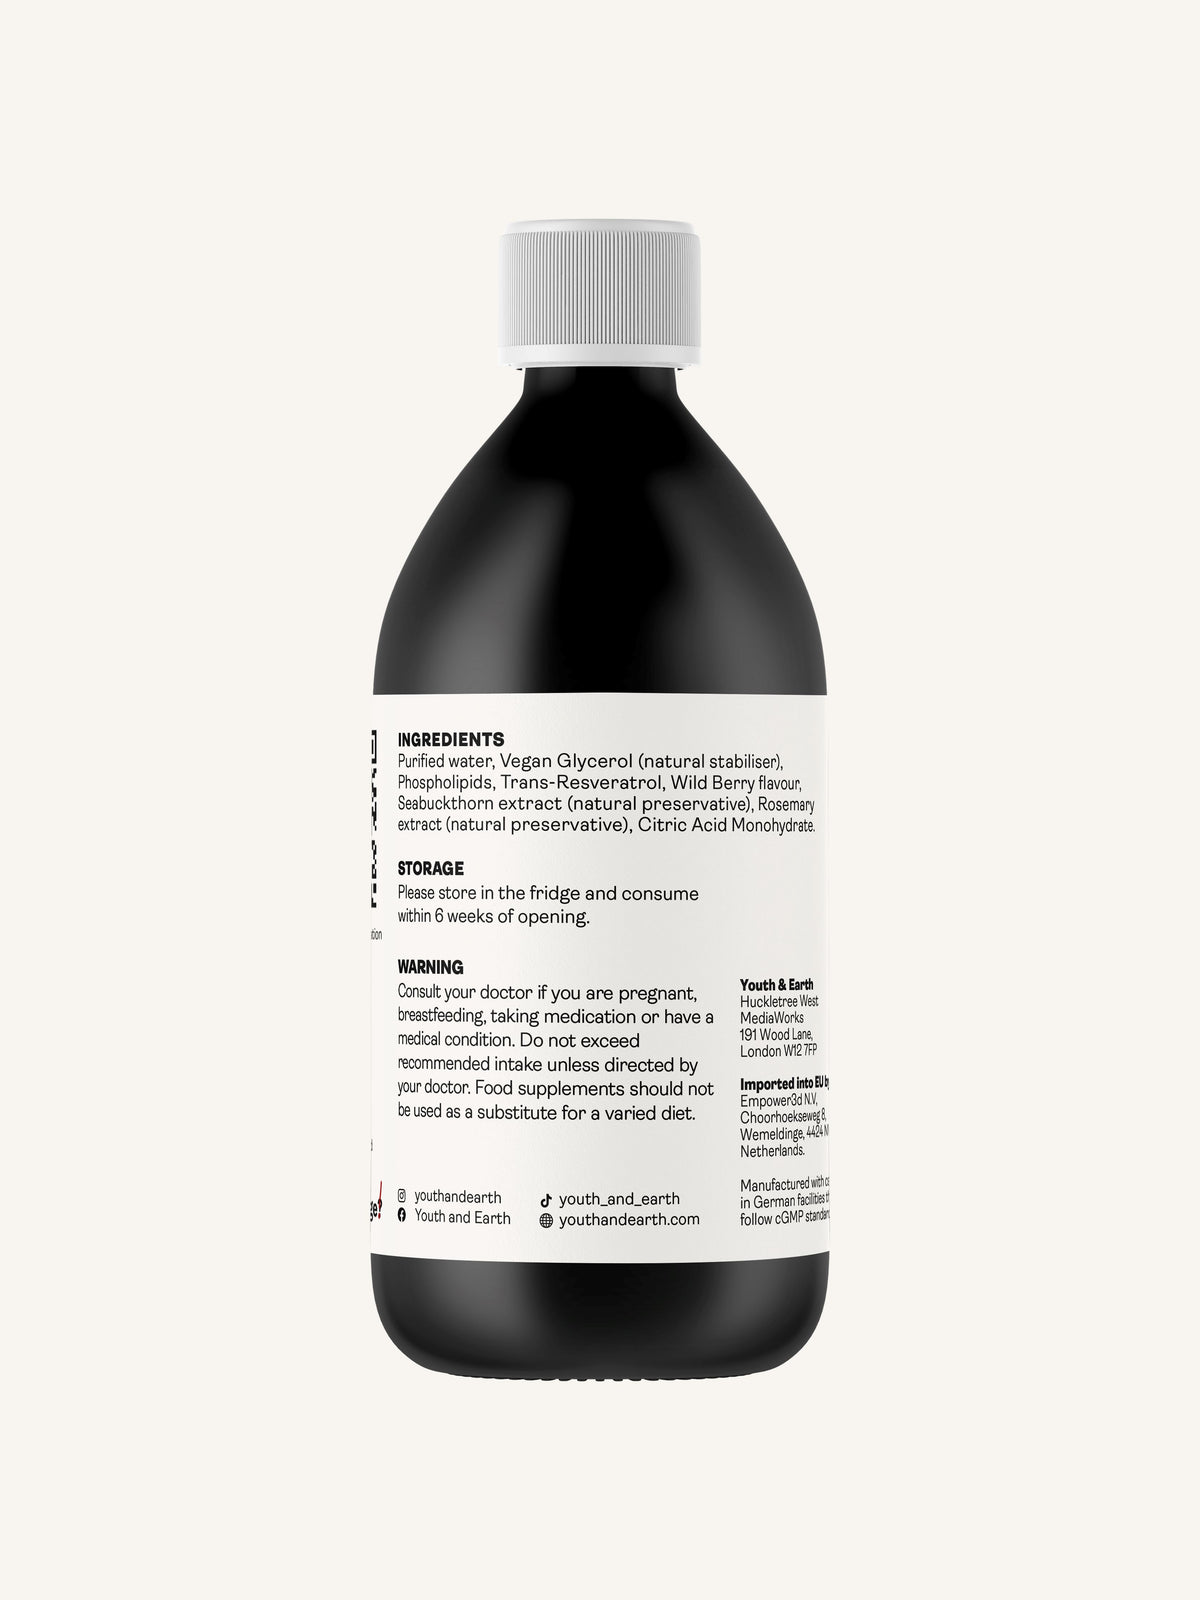 Liposomal Resveratrol 200mg – Wild Berry Flavour 250ml Vitamins &amp; Supplements Trans-Resveratrol 